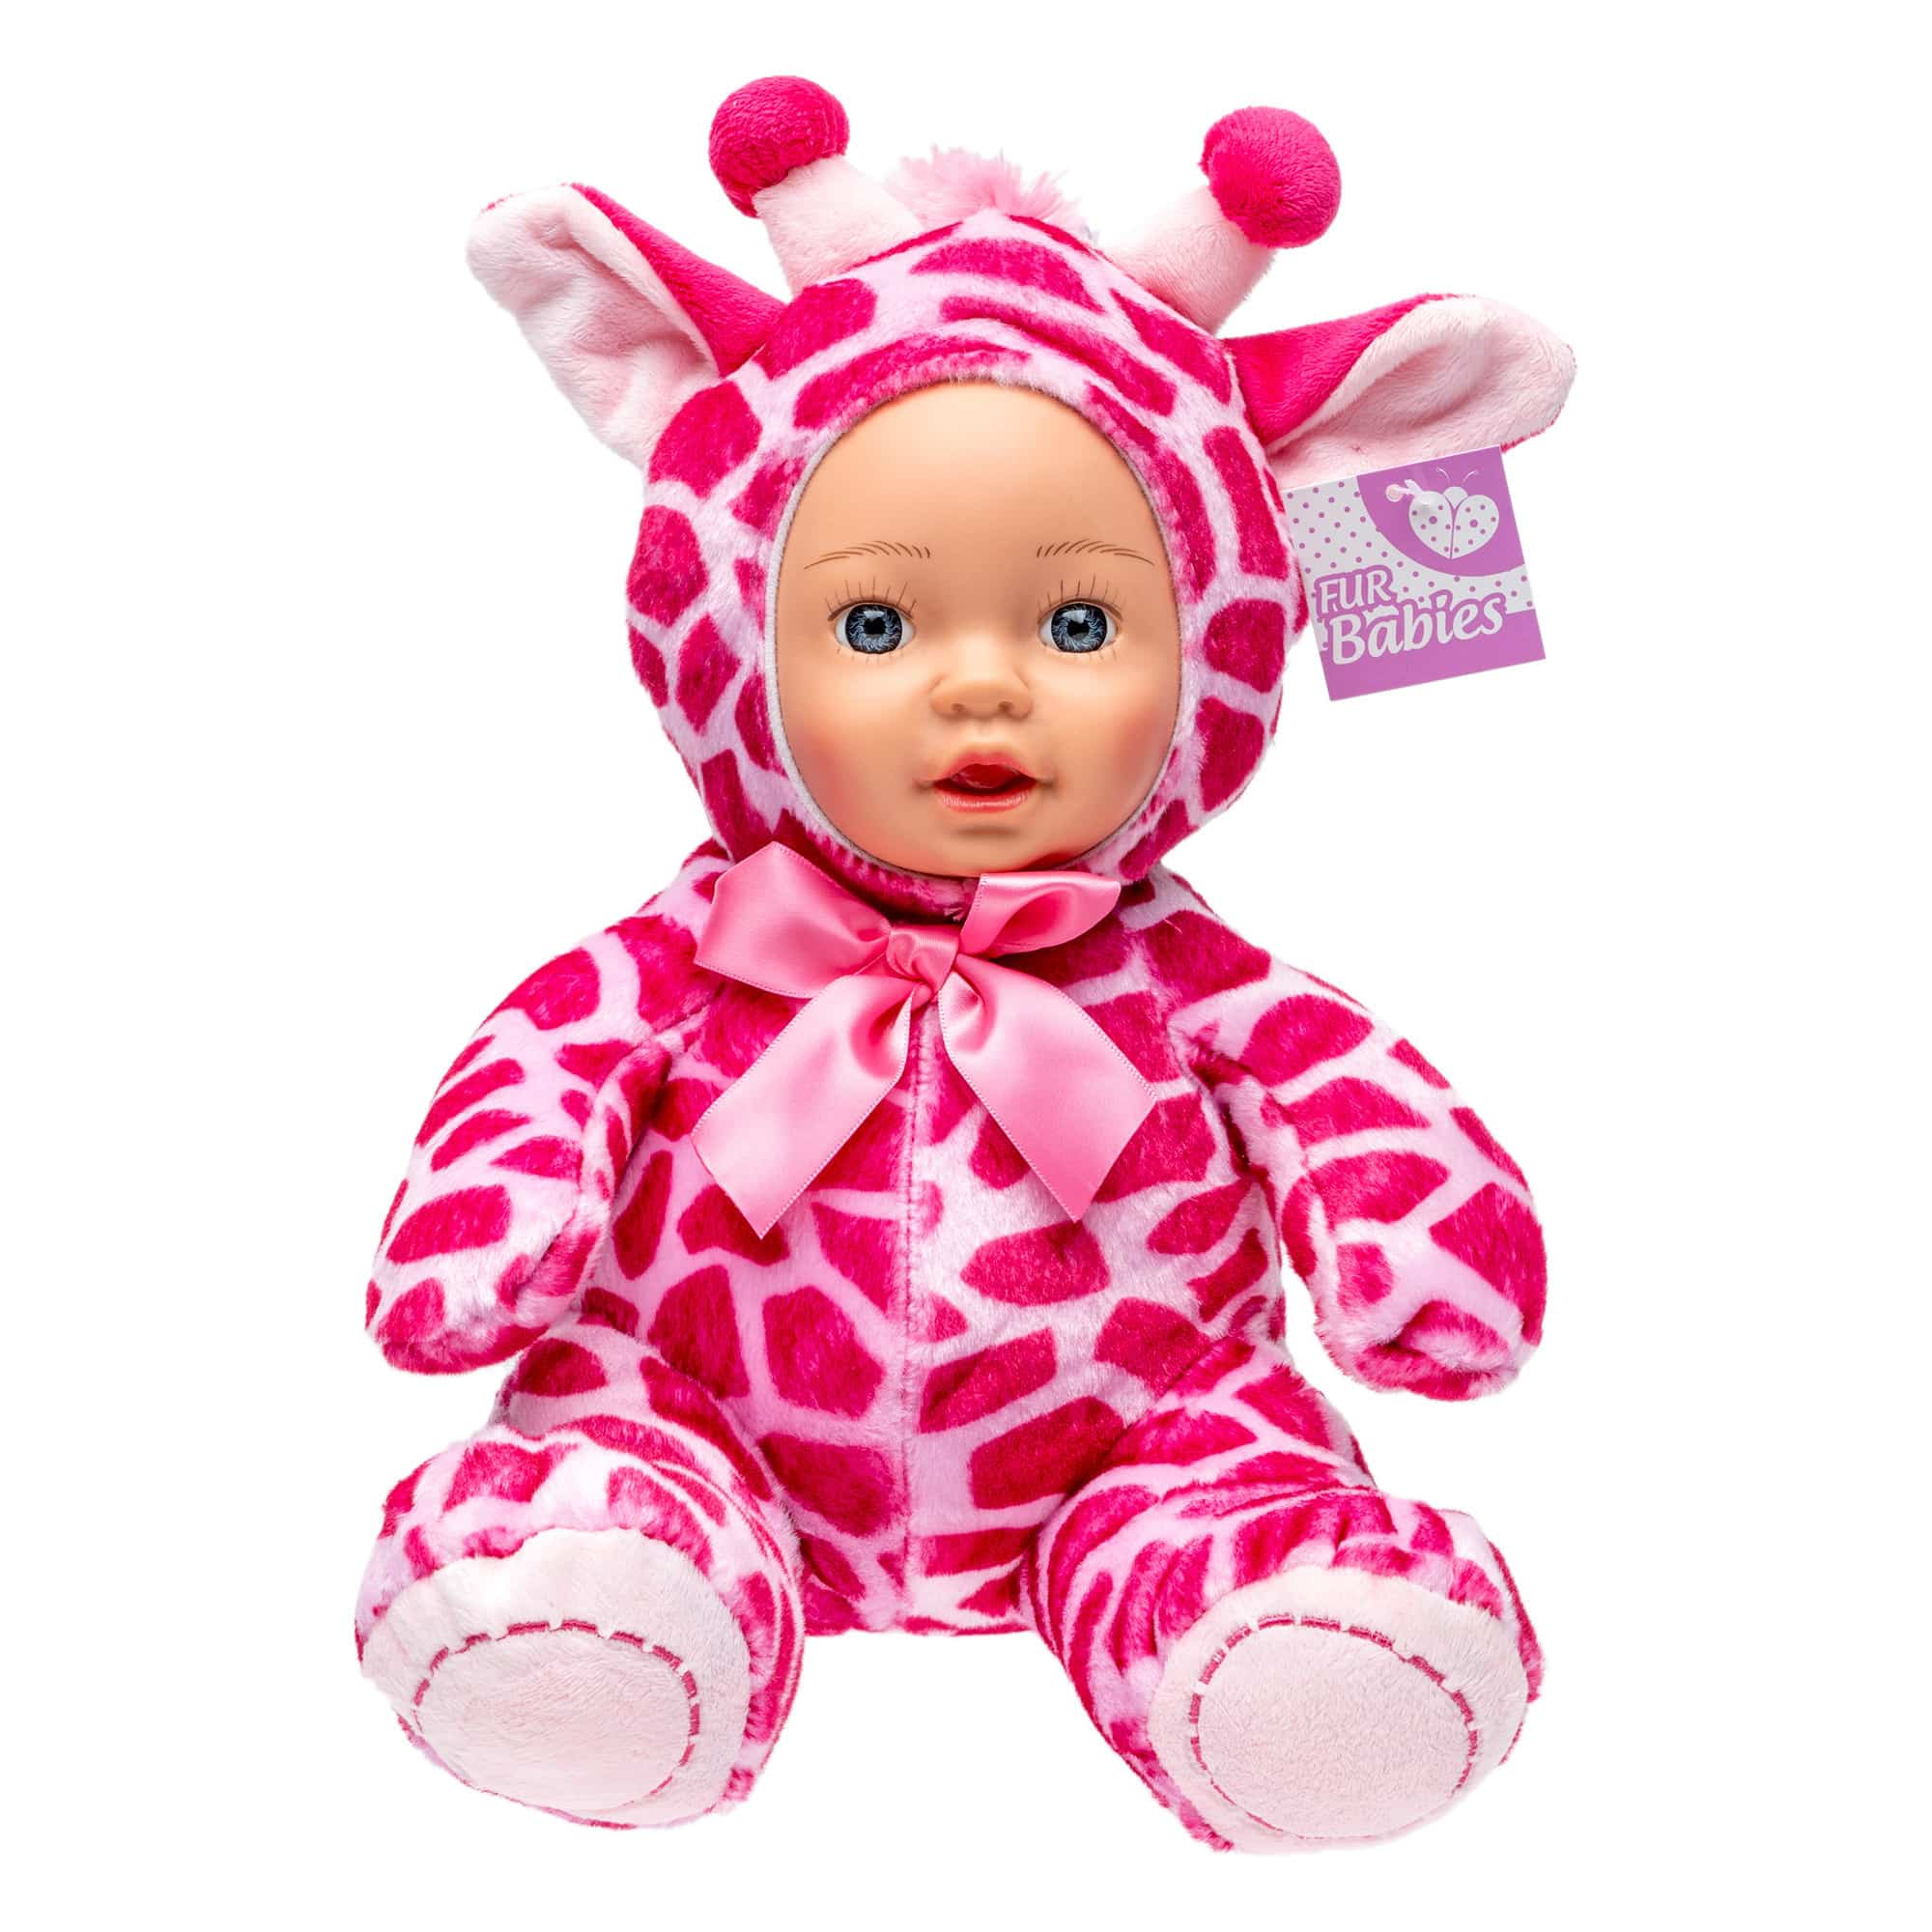 Fur Babies - 24cm Plush Doll - Candy